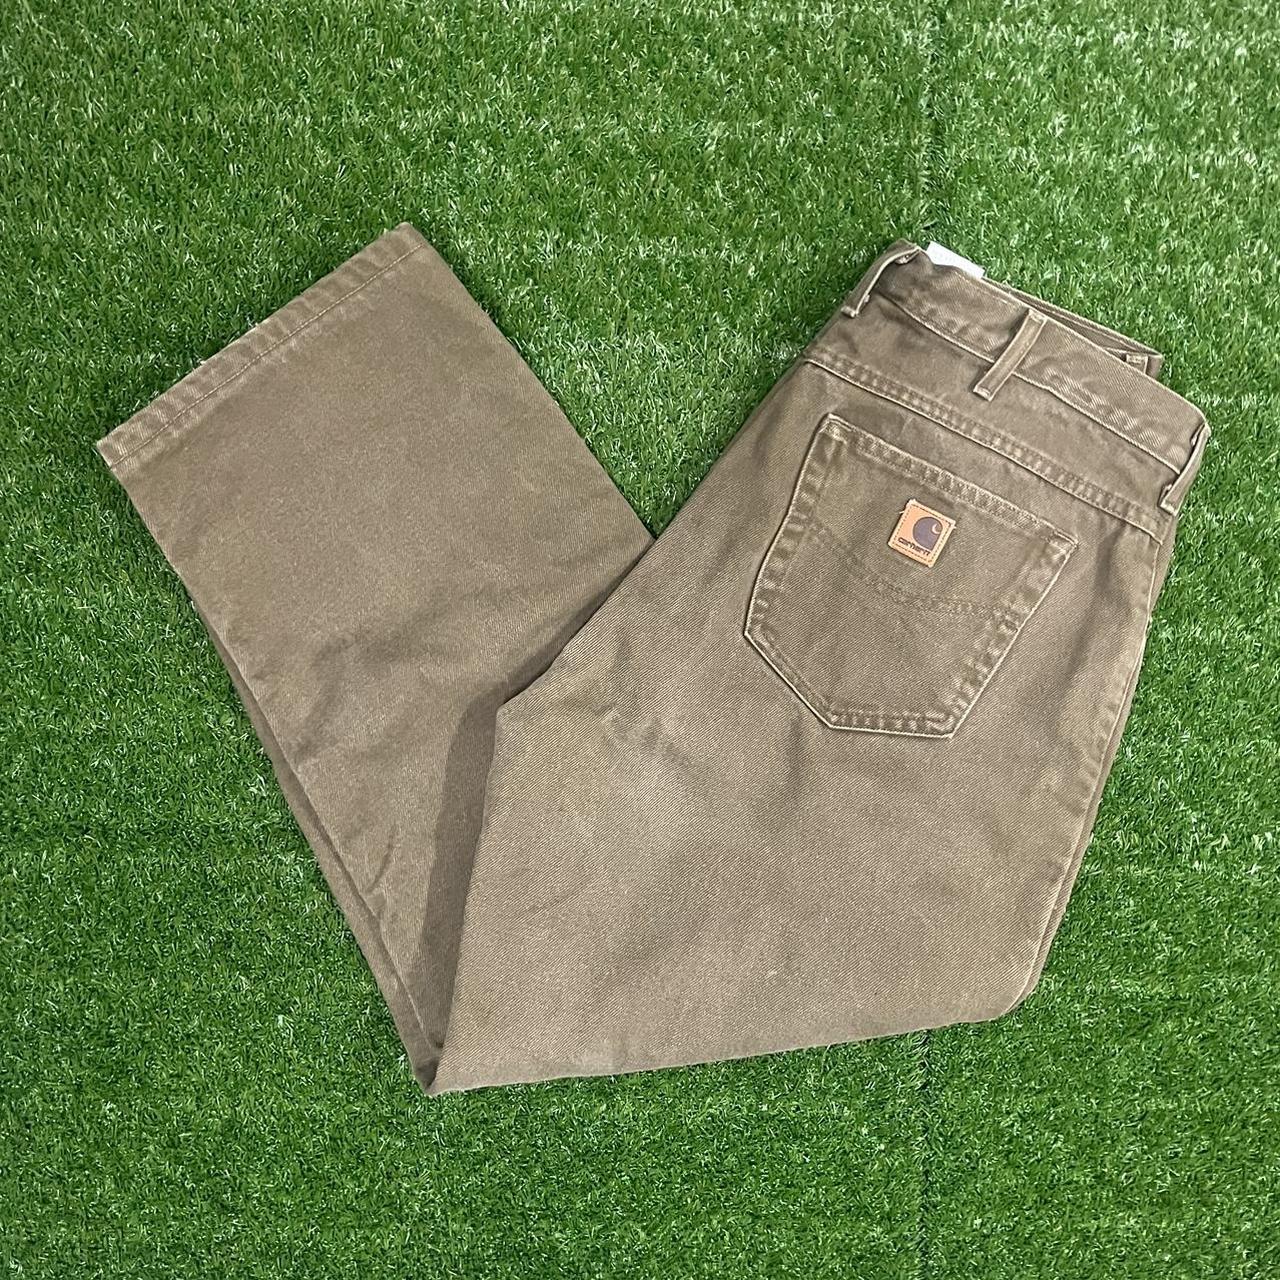 Carhartt Pants Size 38x30 #vintage #carhartt #brown - Depop